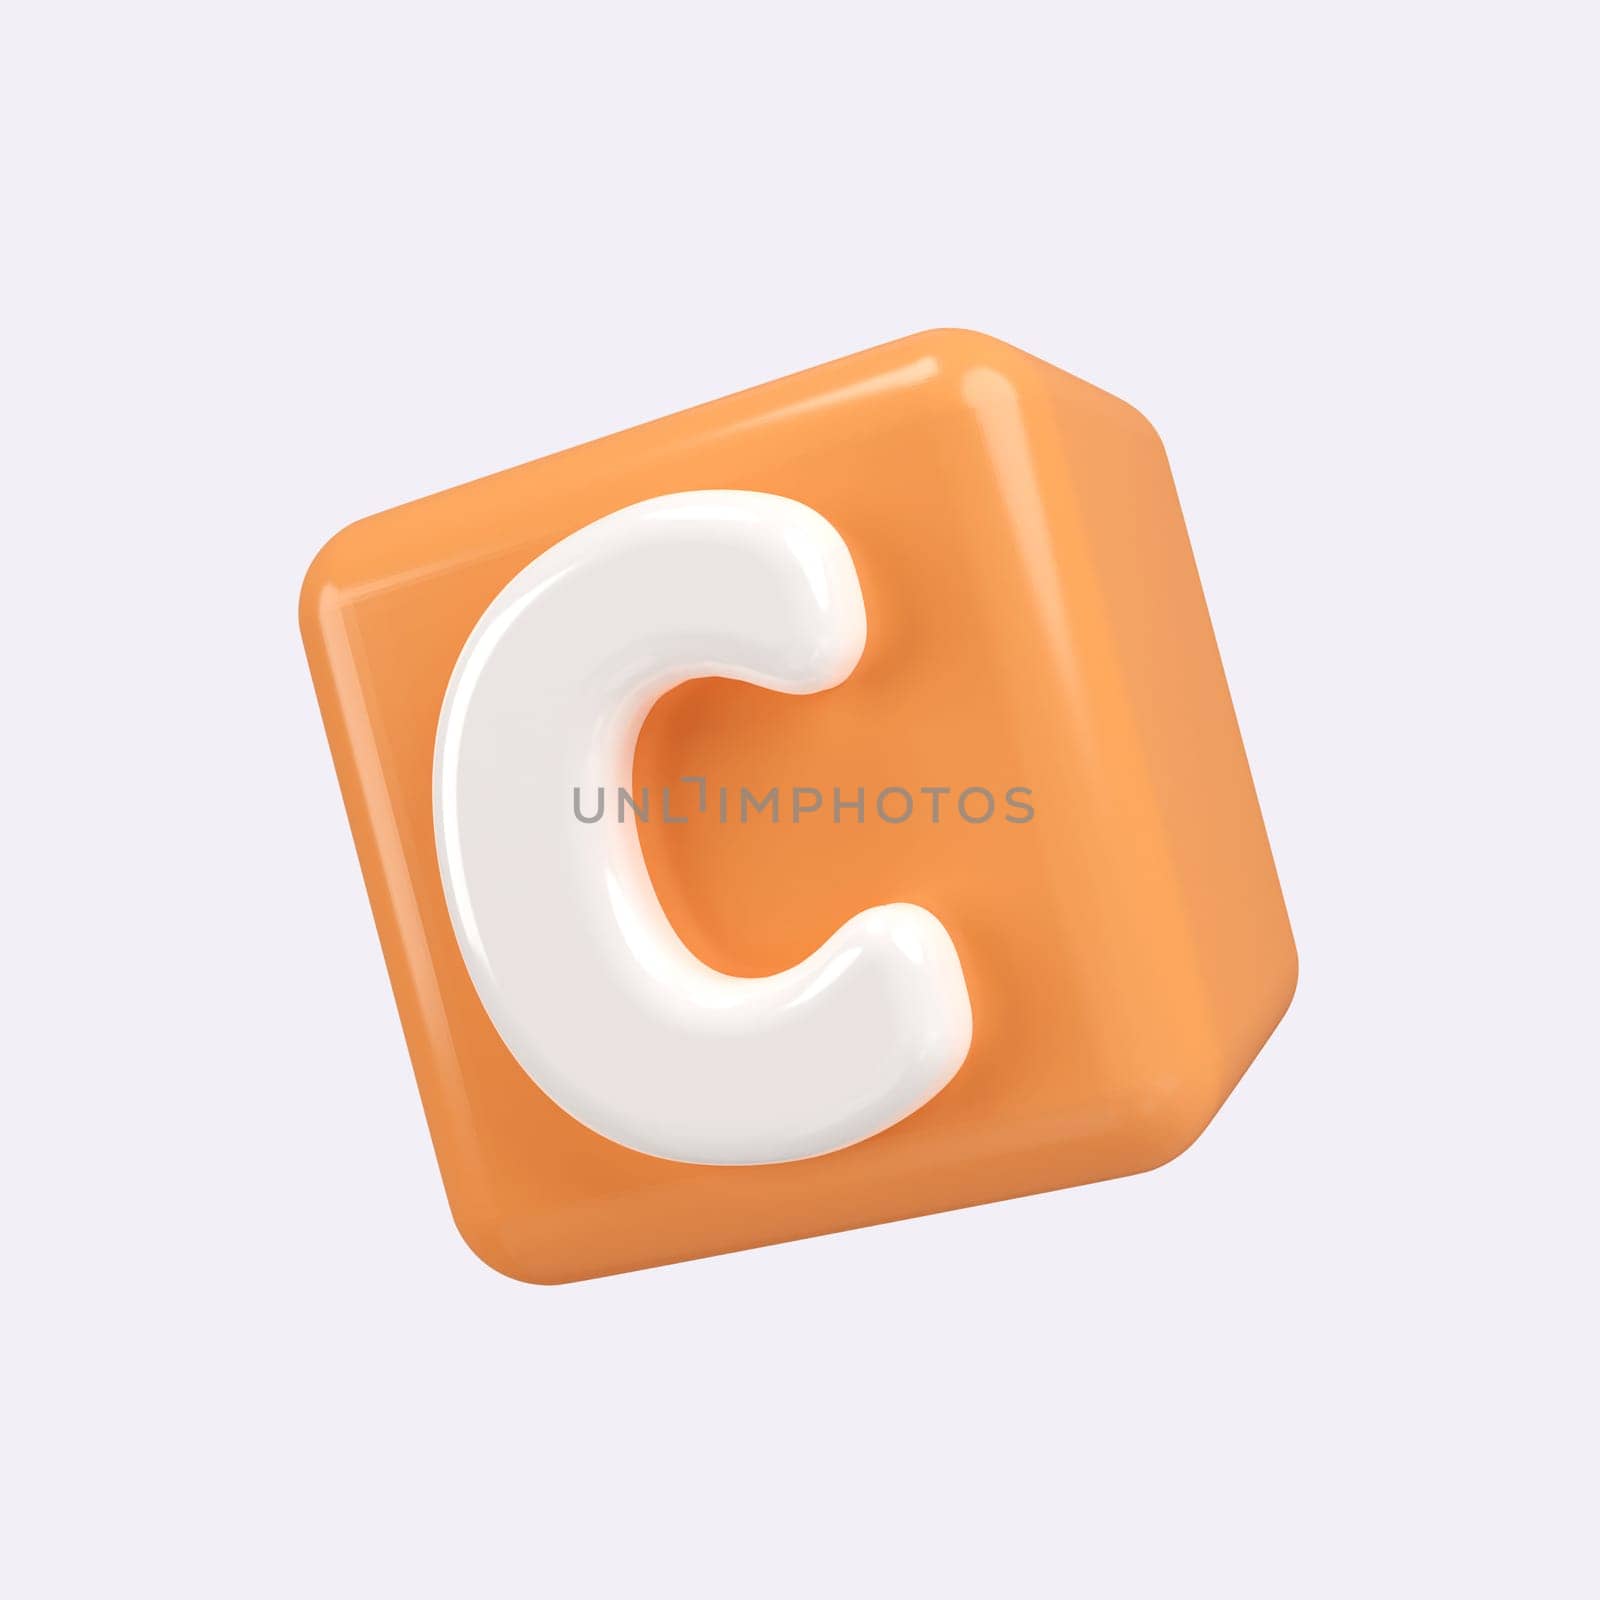 3d Orange C block wasps. minimal school icon. isolated on background, icon symbol clipping path. 3d render illustration.